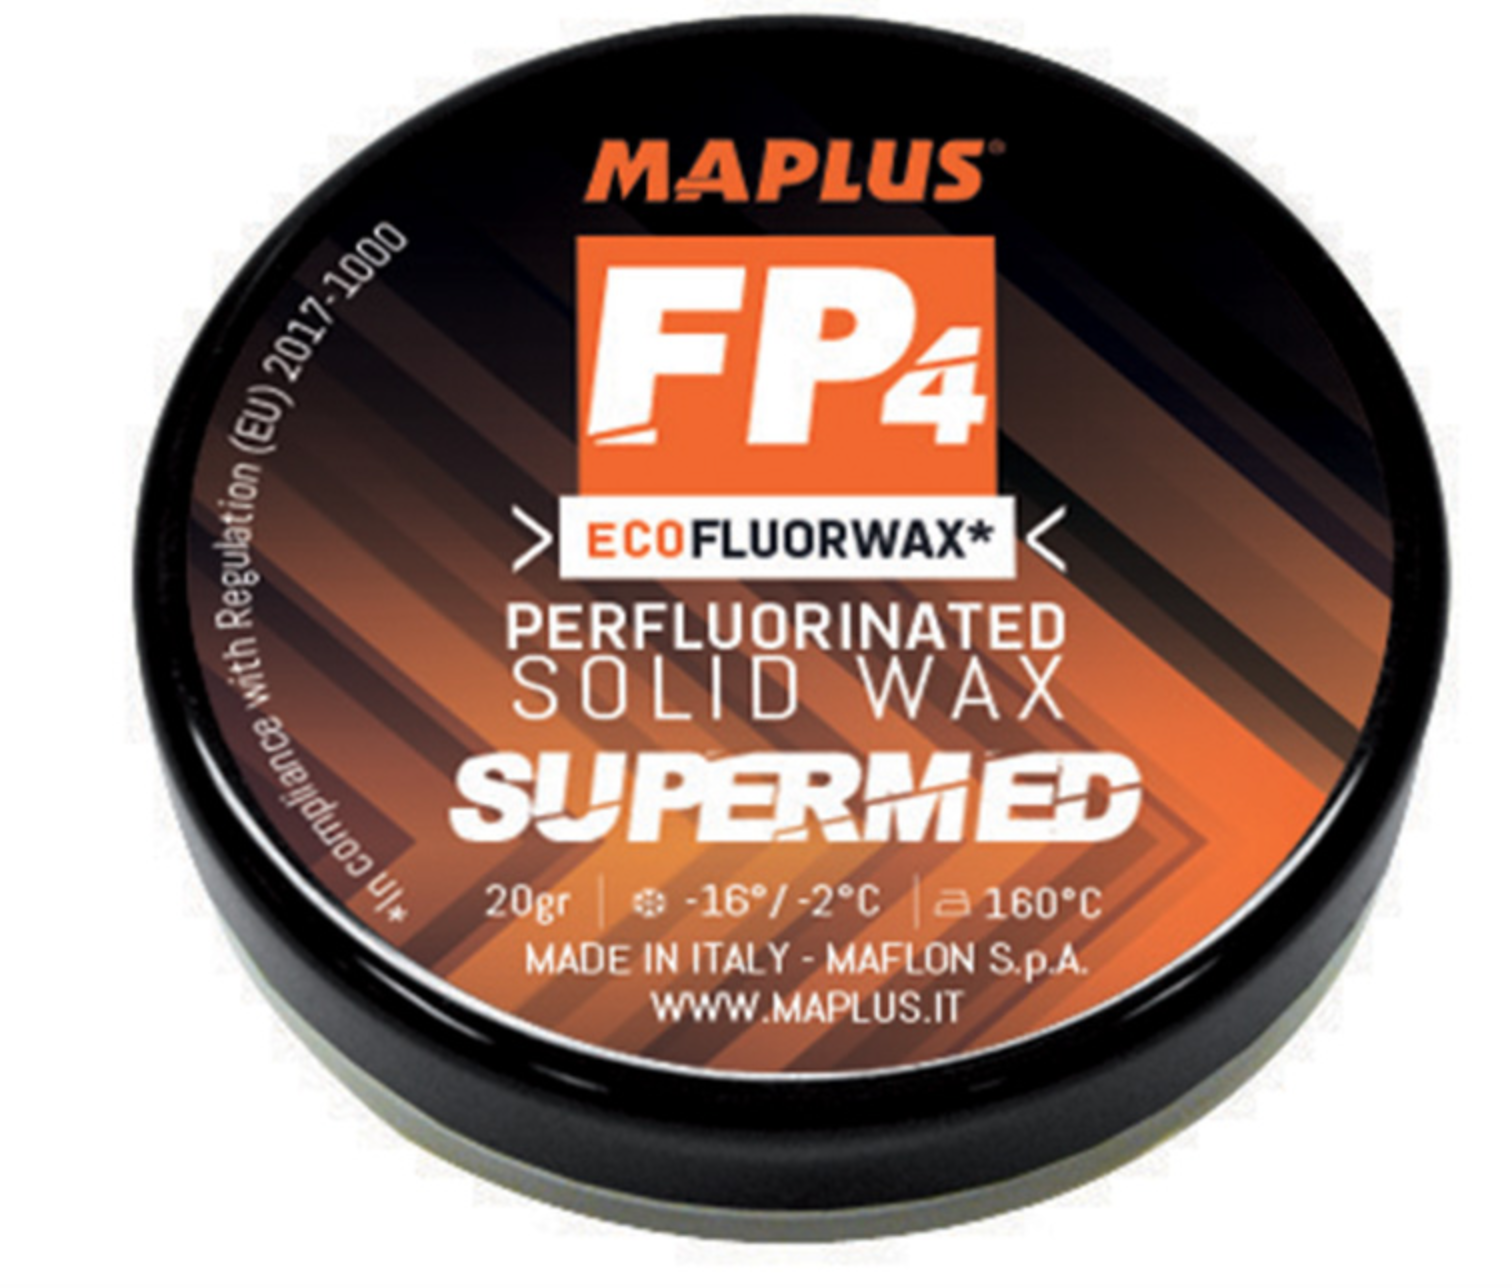 MAPLUS FP4 SUPERMED Block